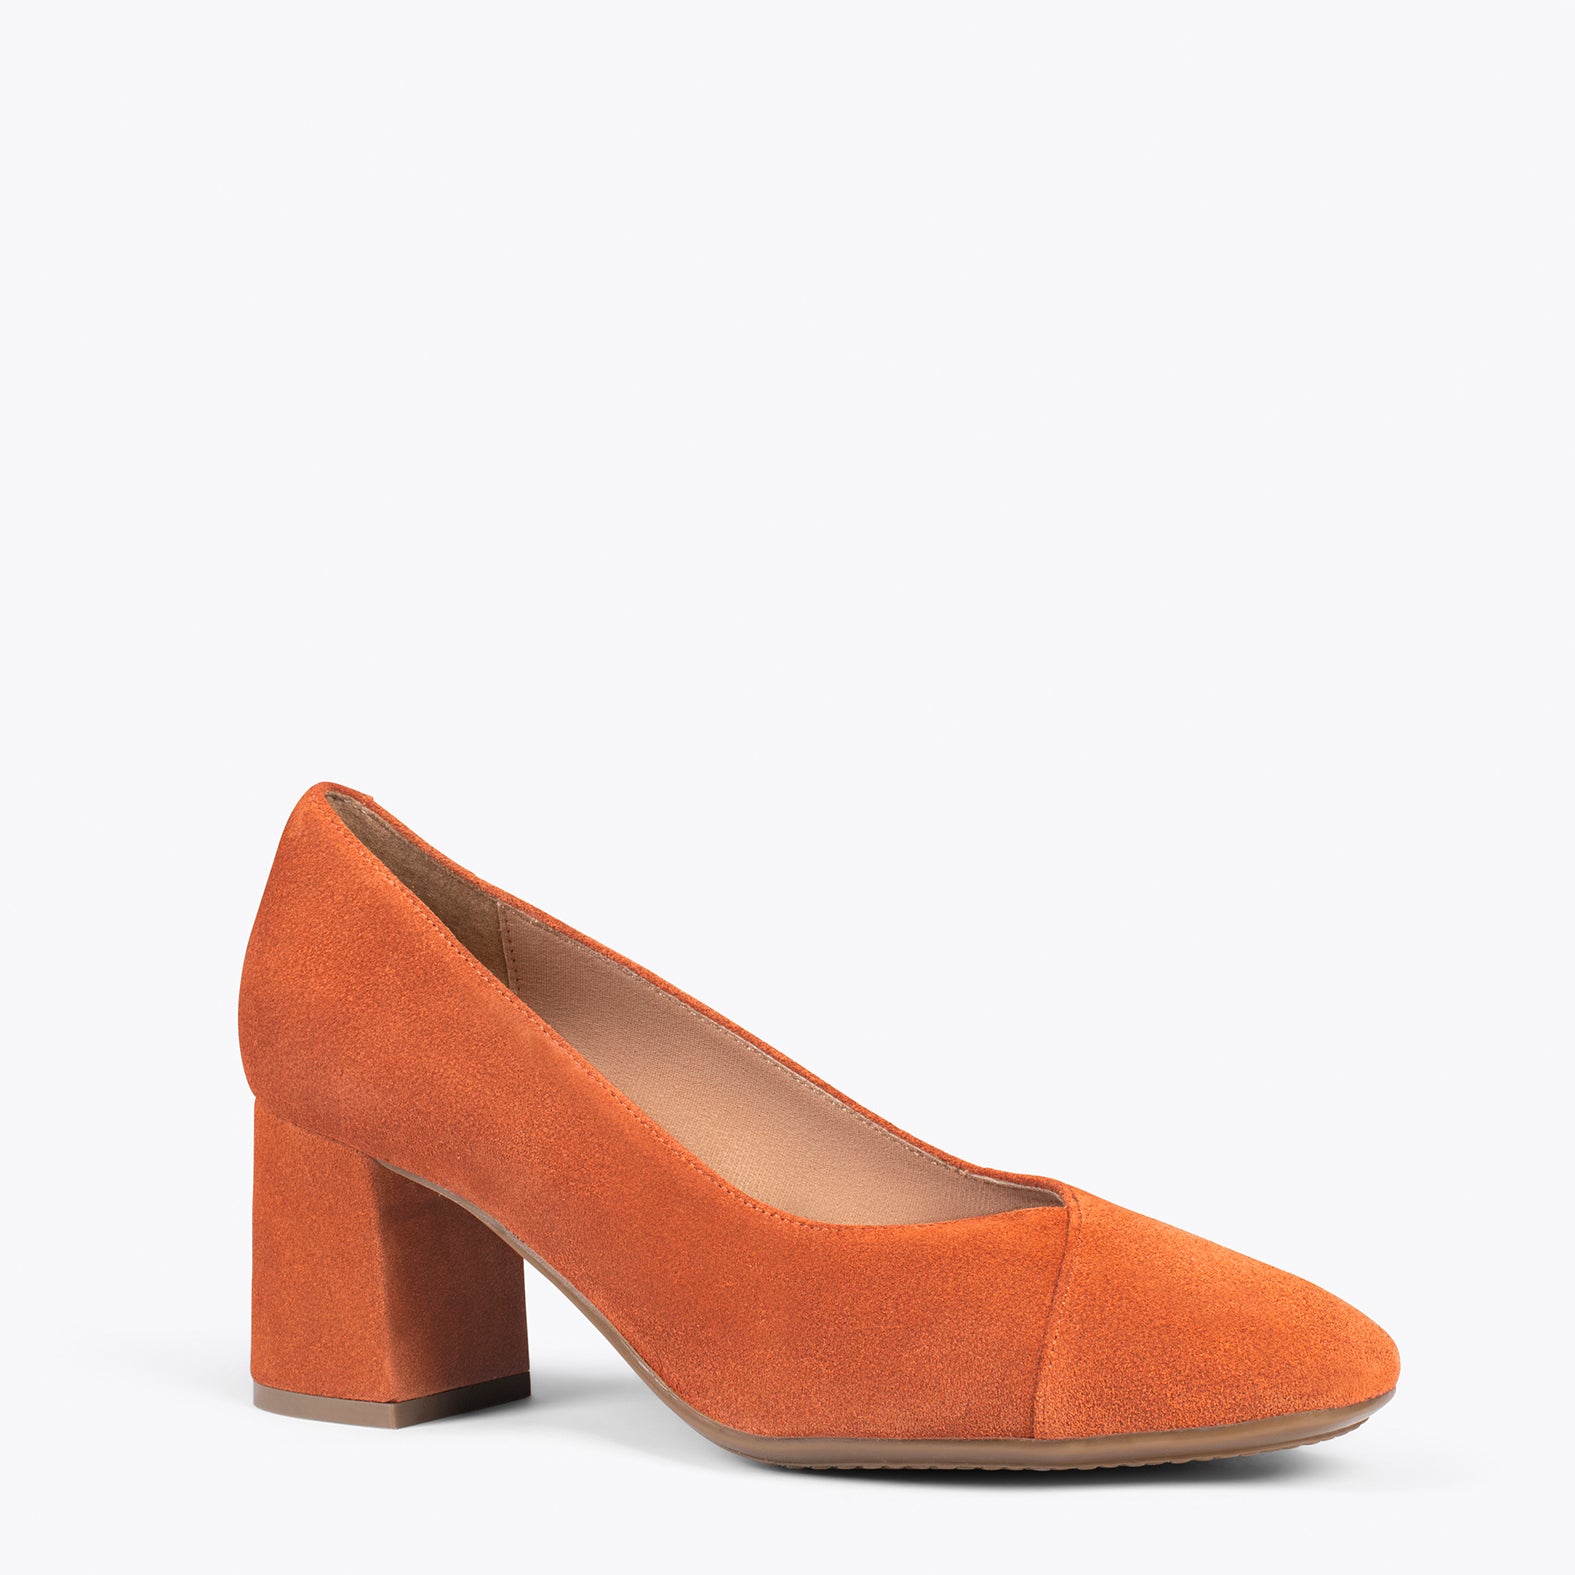 EMMA – ORANGE high heels with square toe